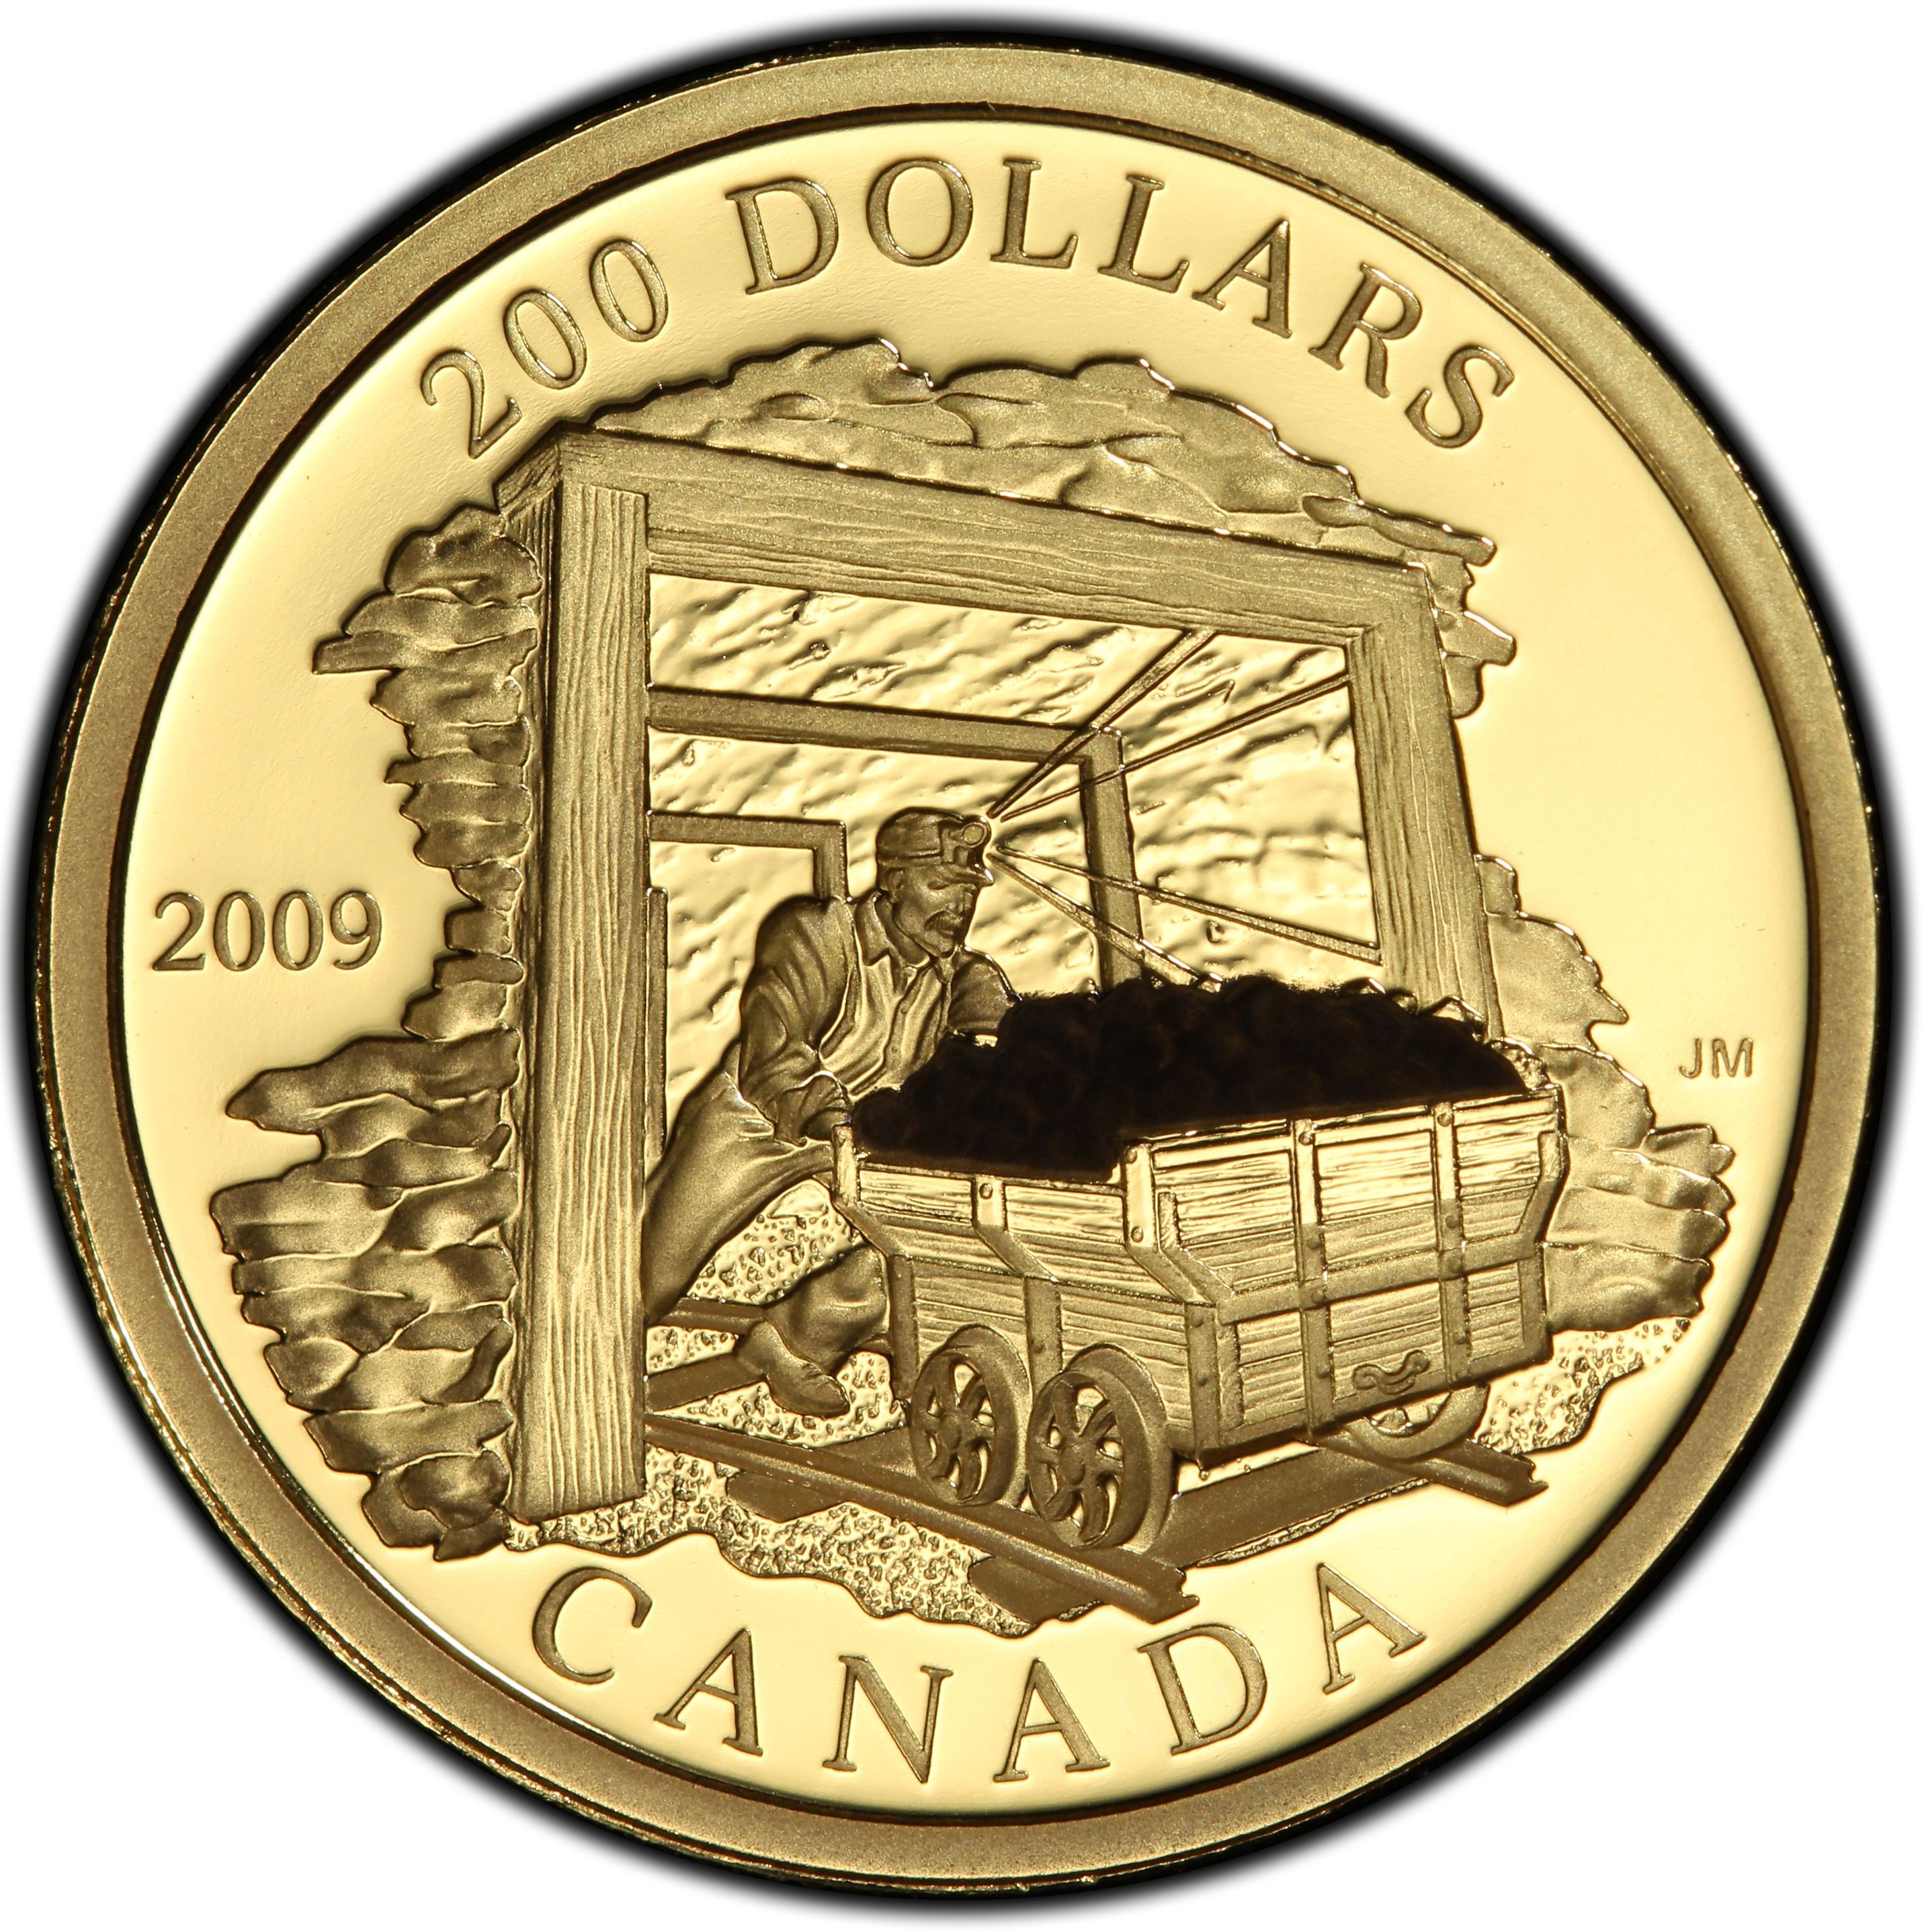 California gold rush - Wikipedia